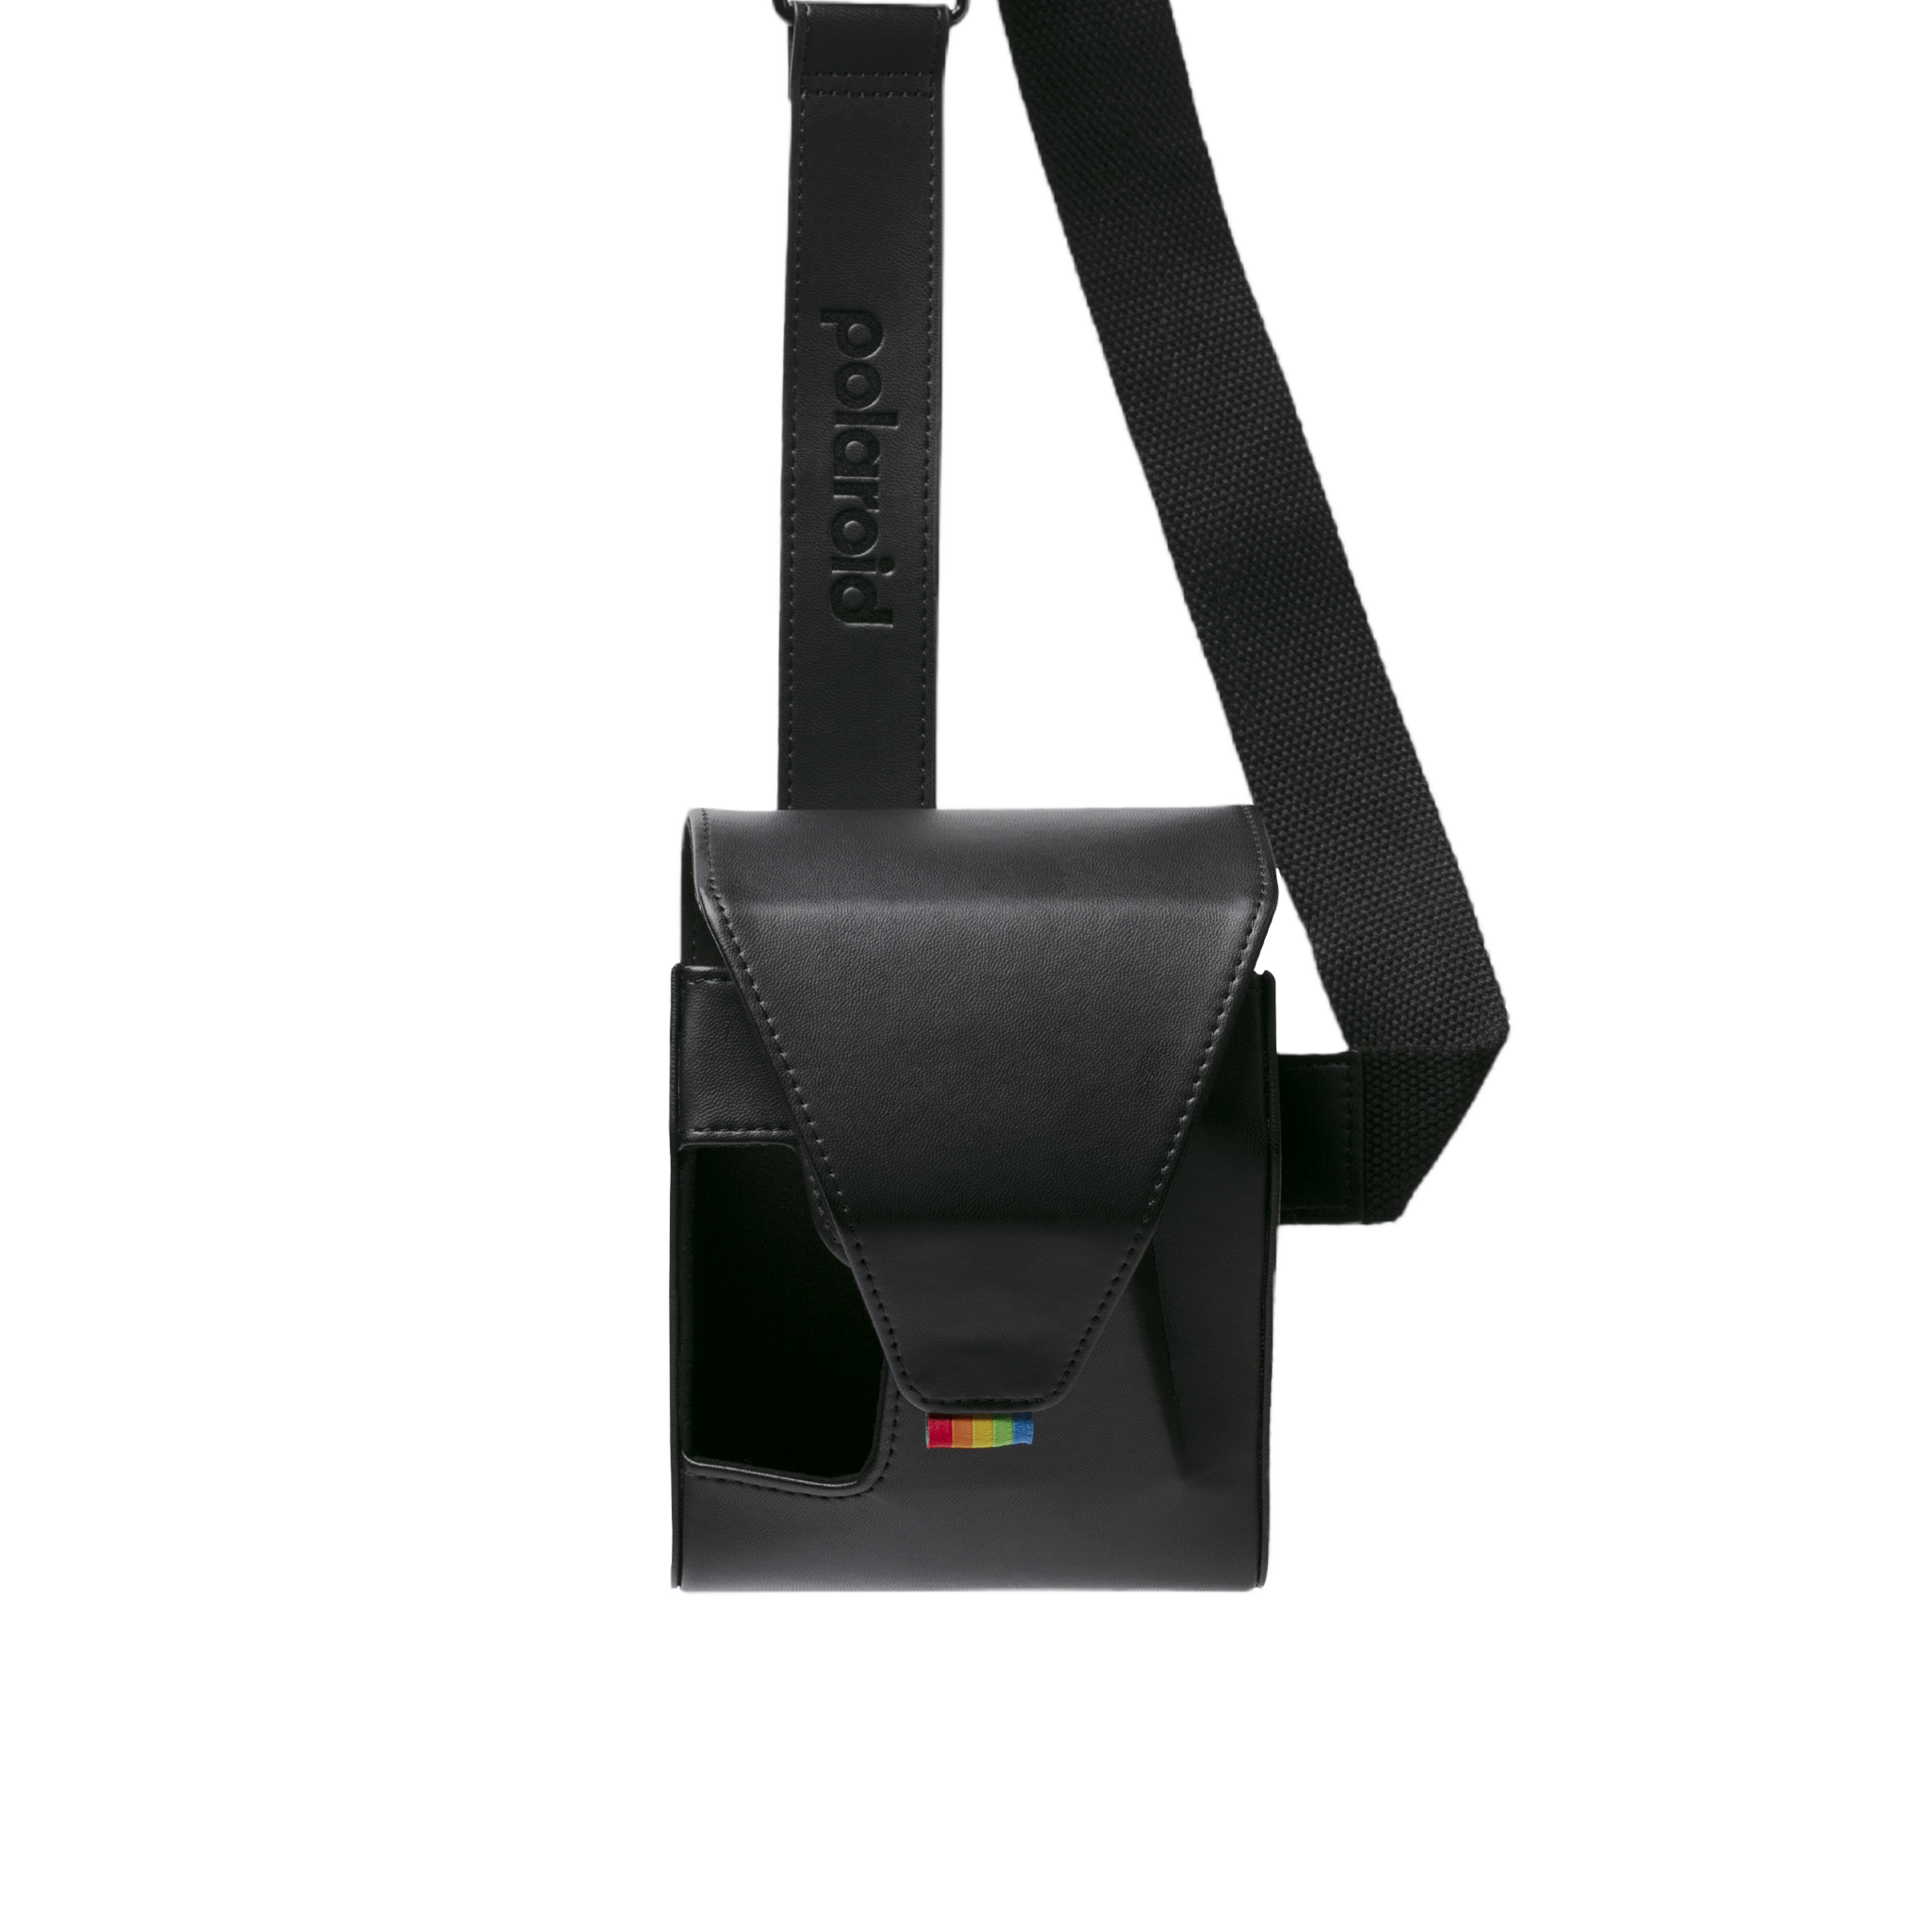 POLAROID NOW INSTANT CAMERA BAG CASE BLACK + SPECTRUM adjustable Strap (UK)  BNIP